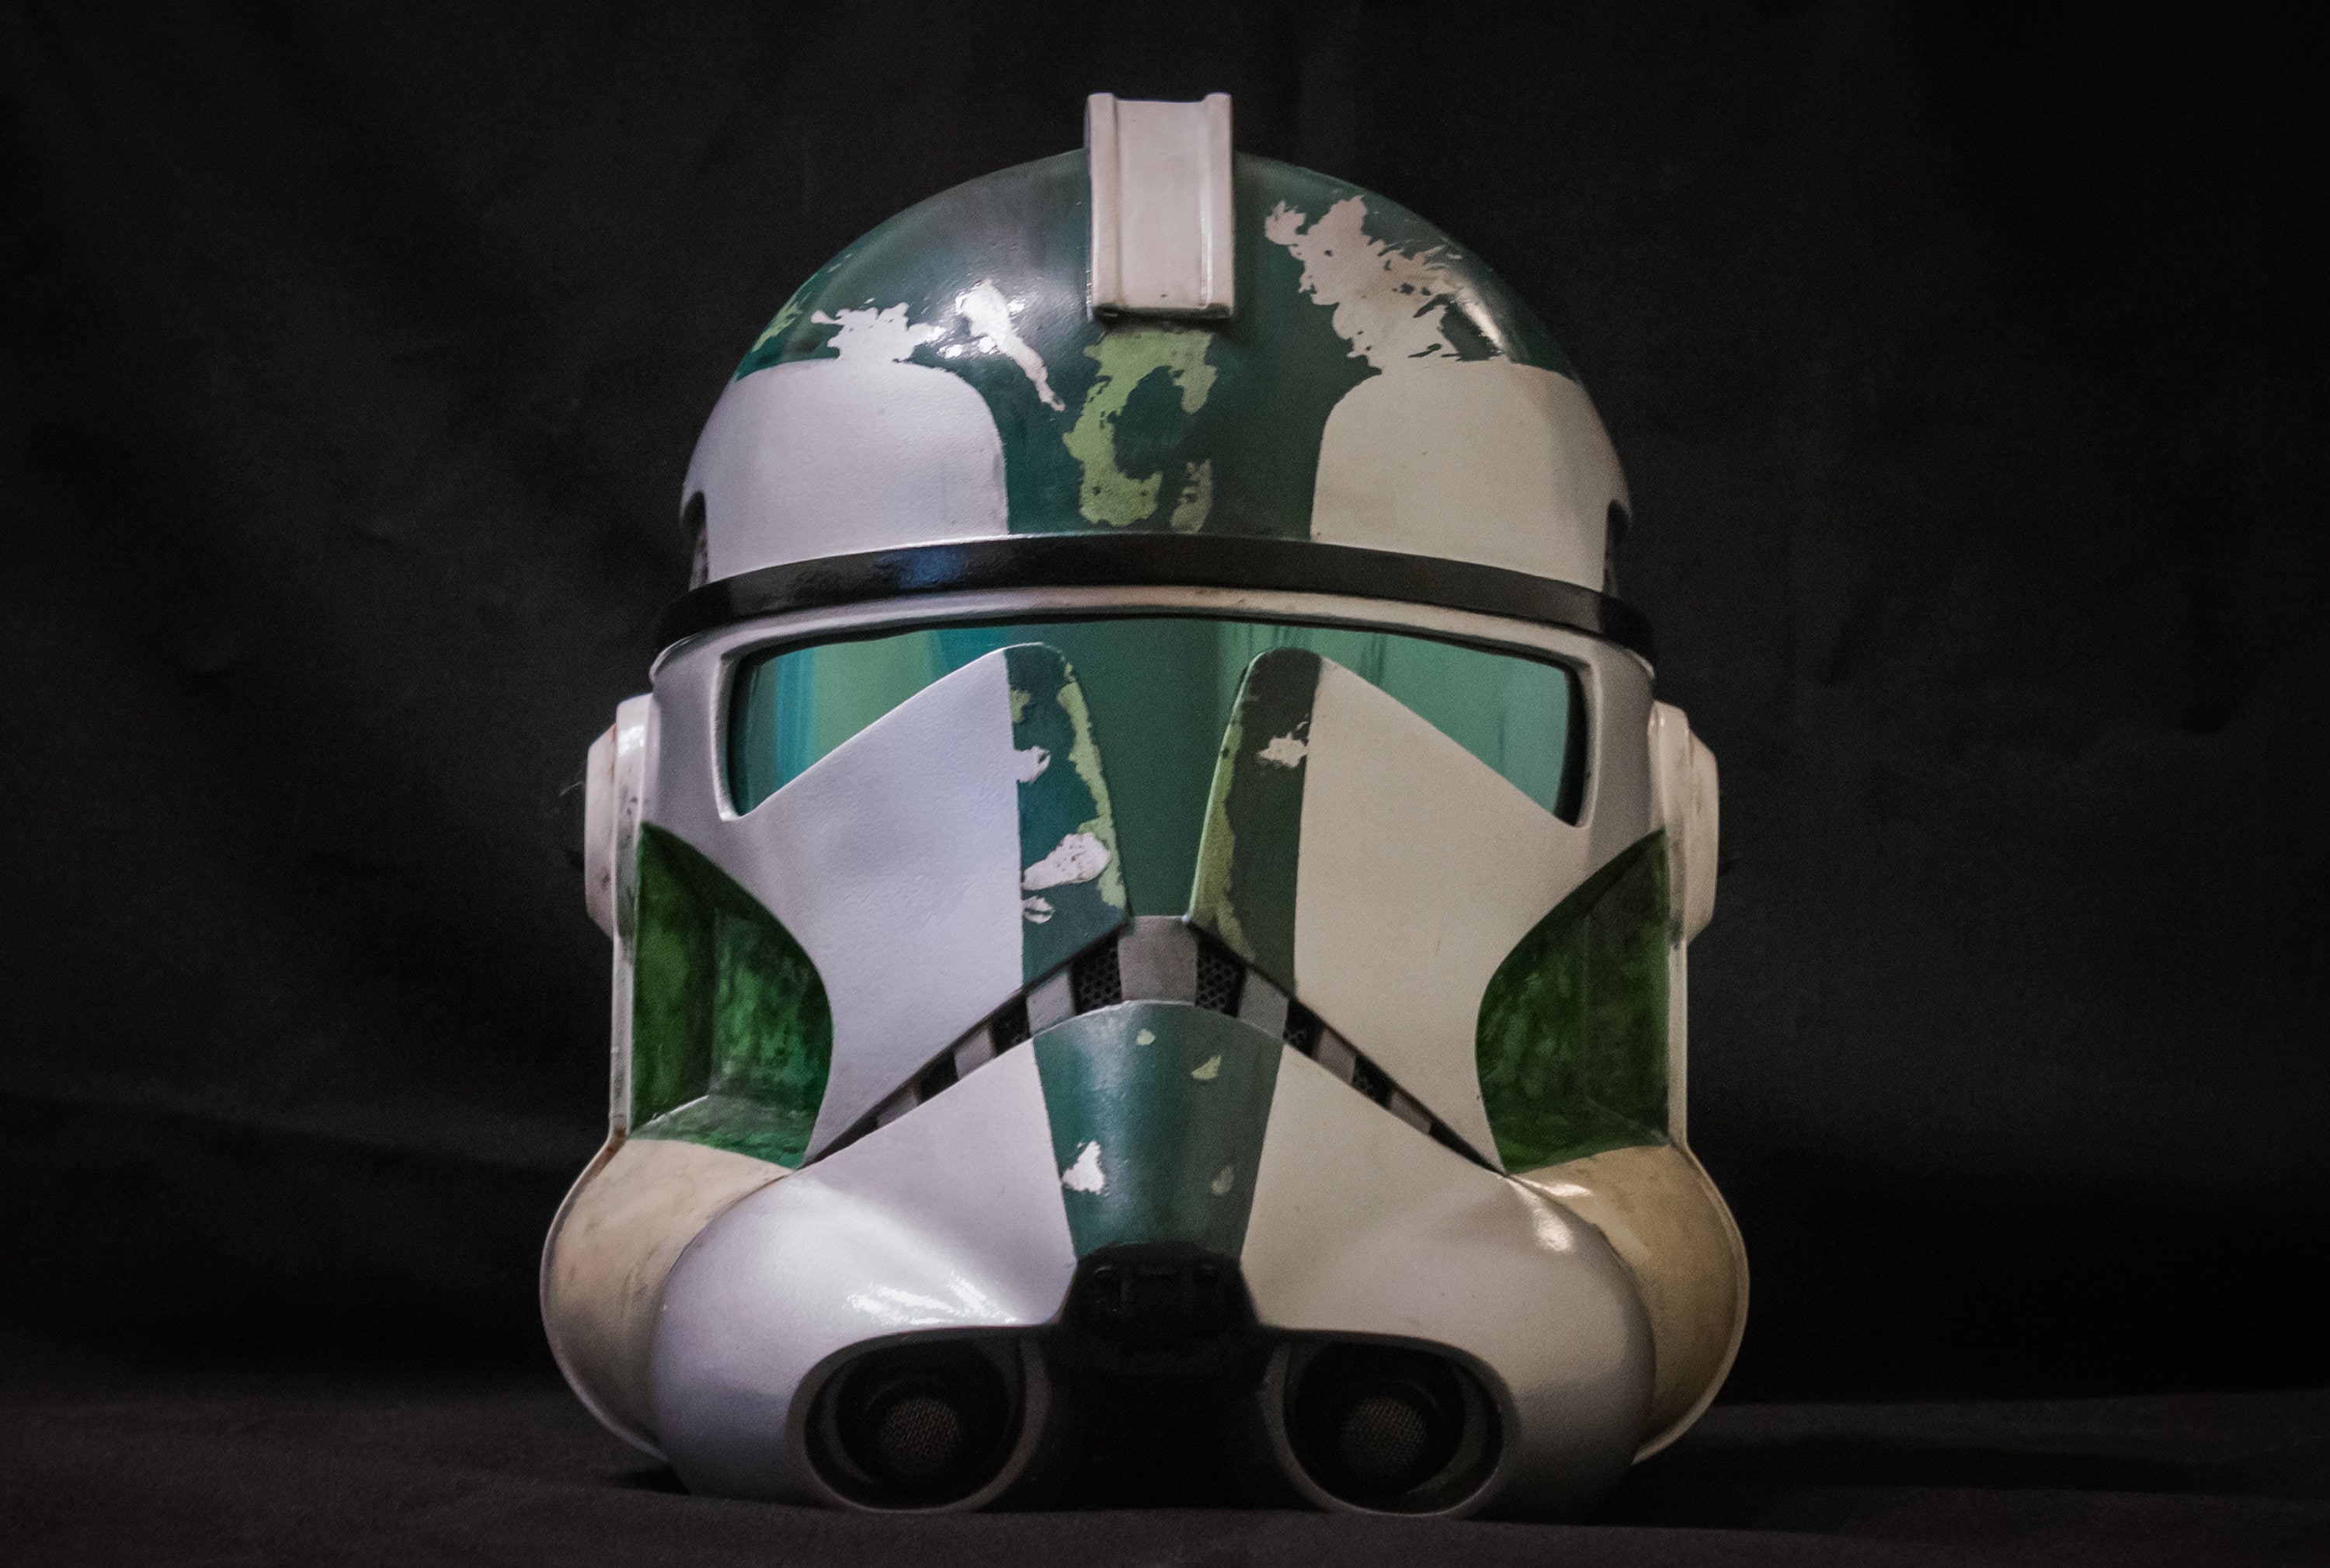 irish clone trooper for Sale,in stock OFF 65